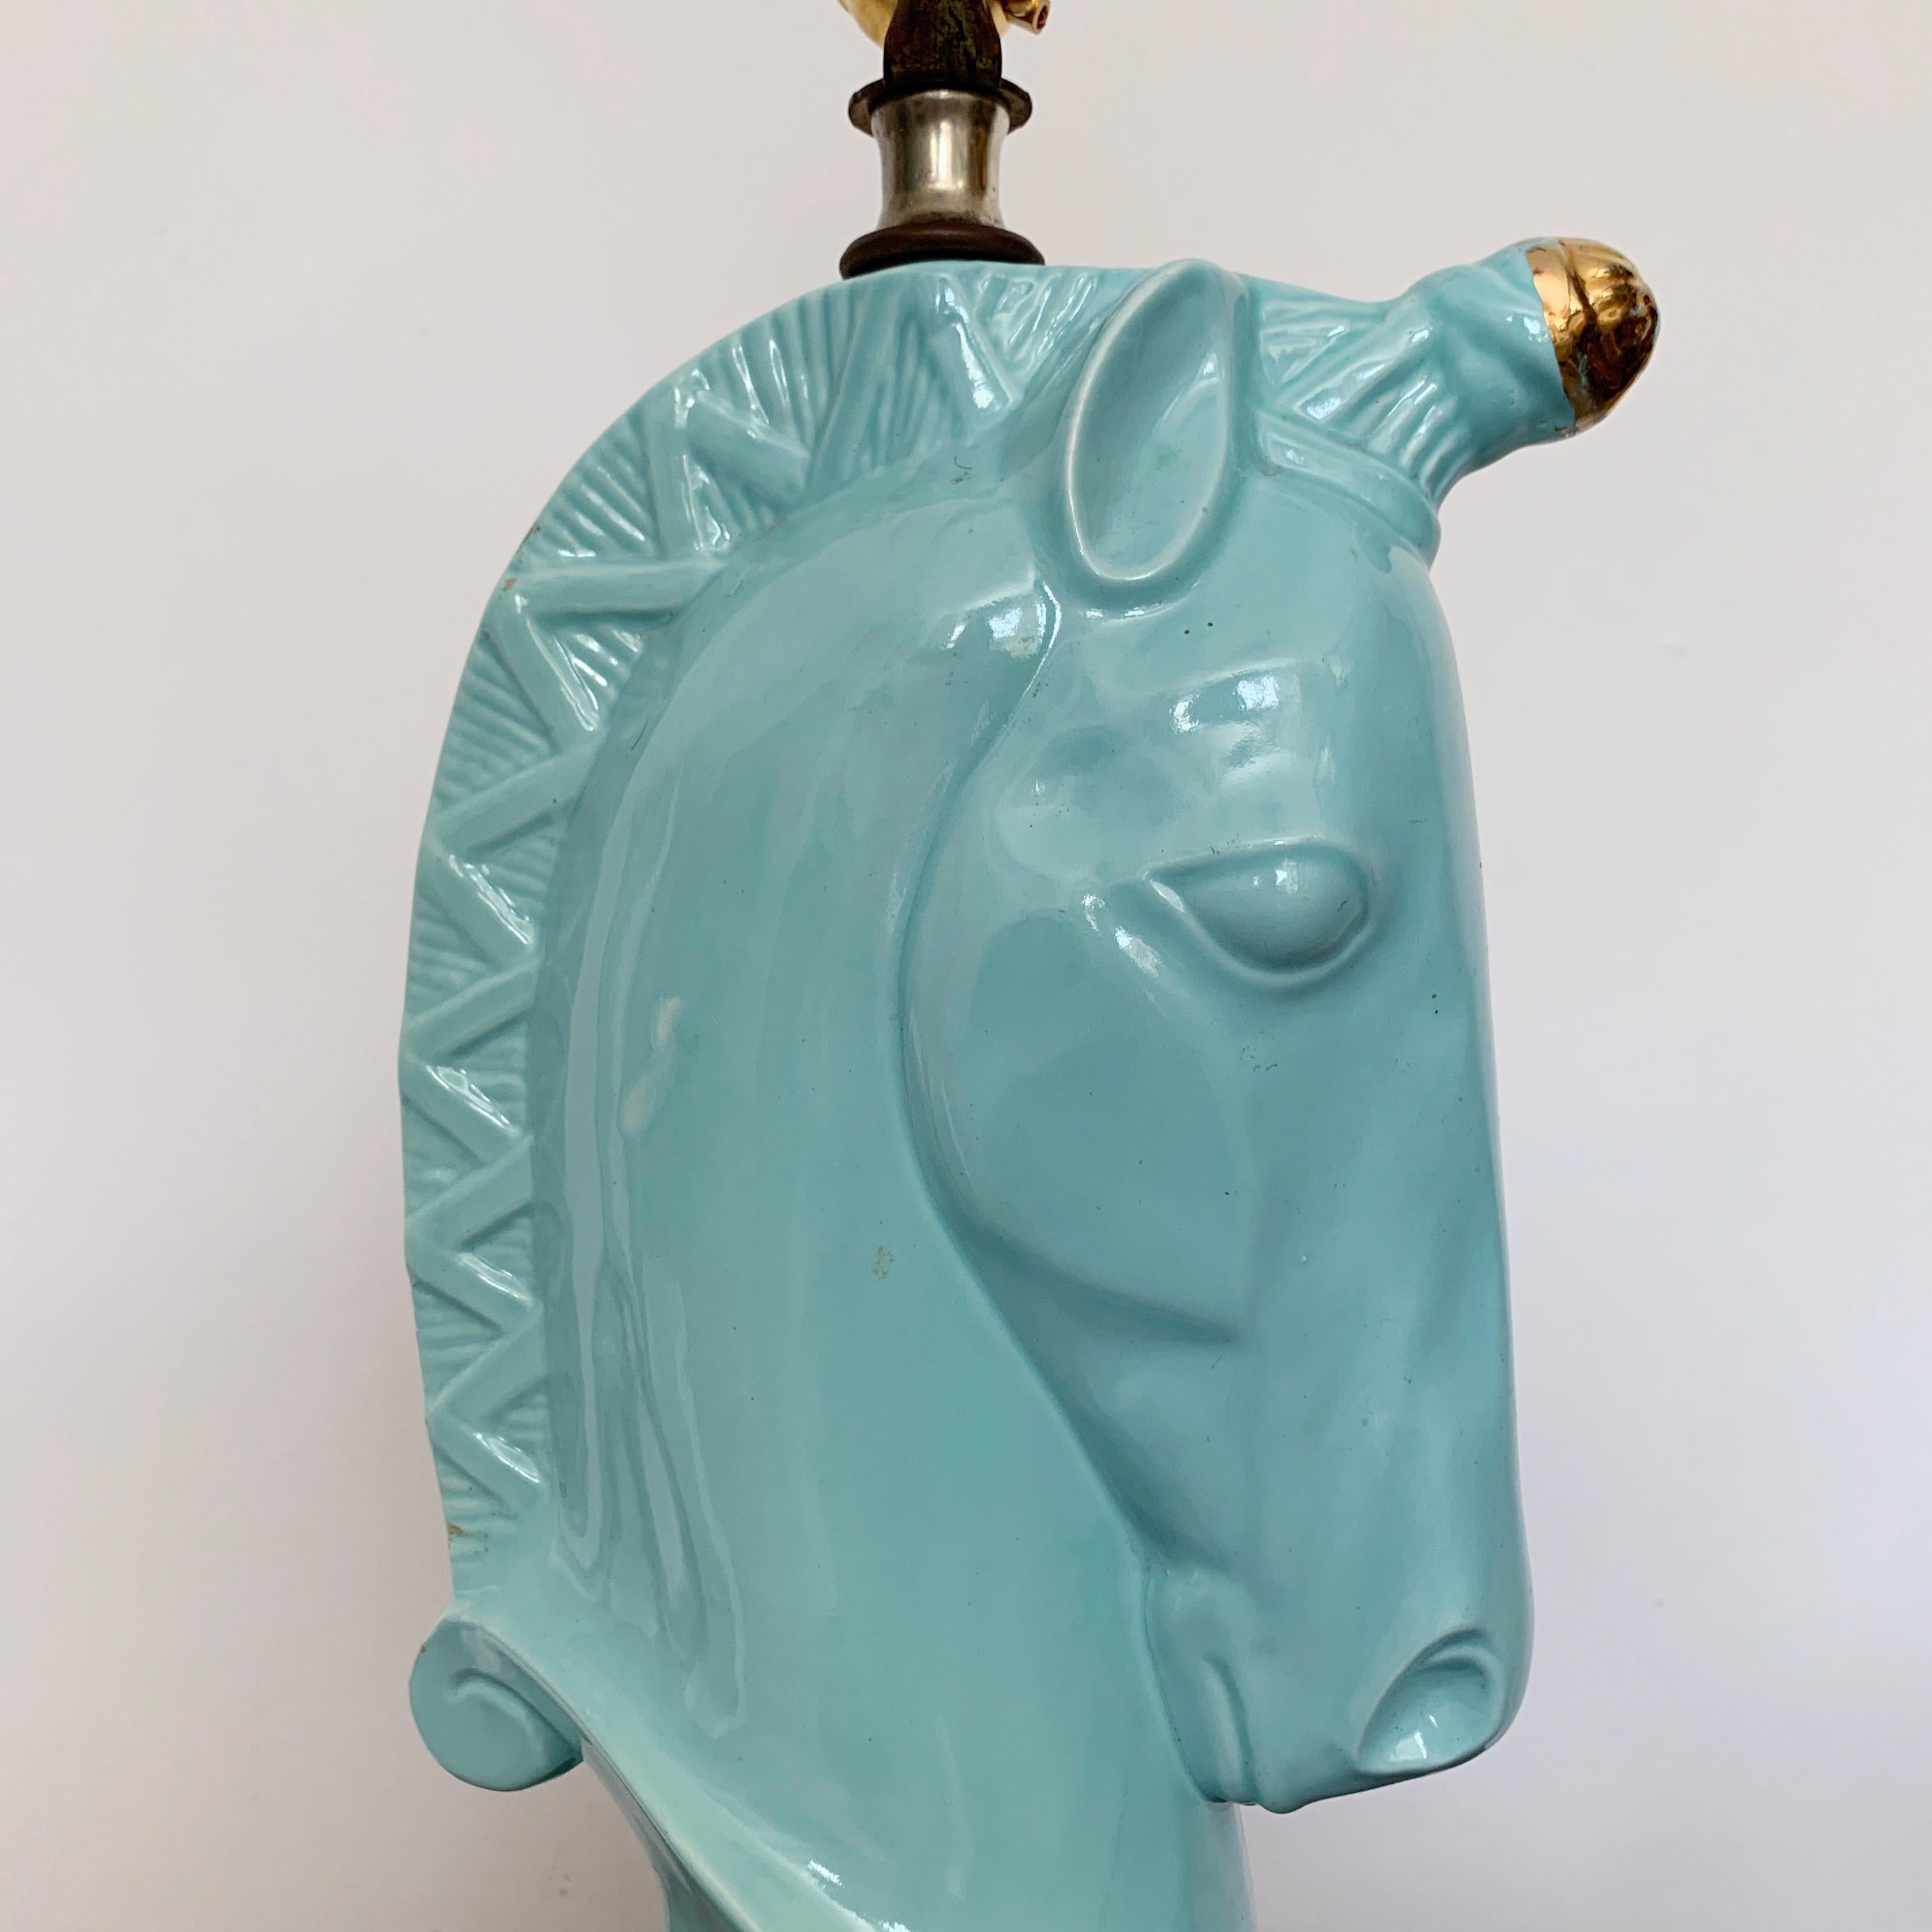 horsehead lamp